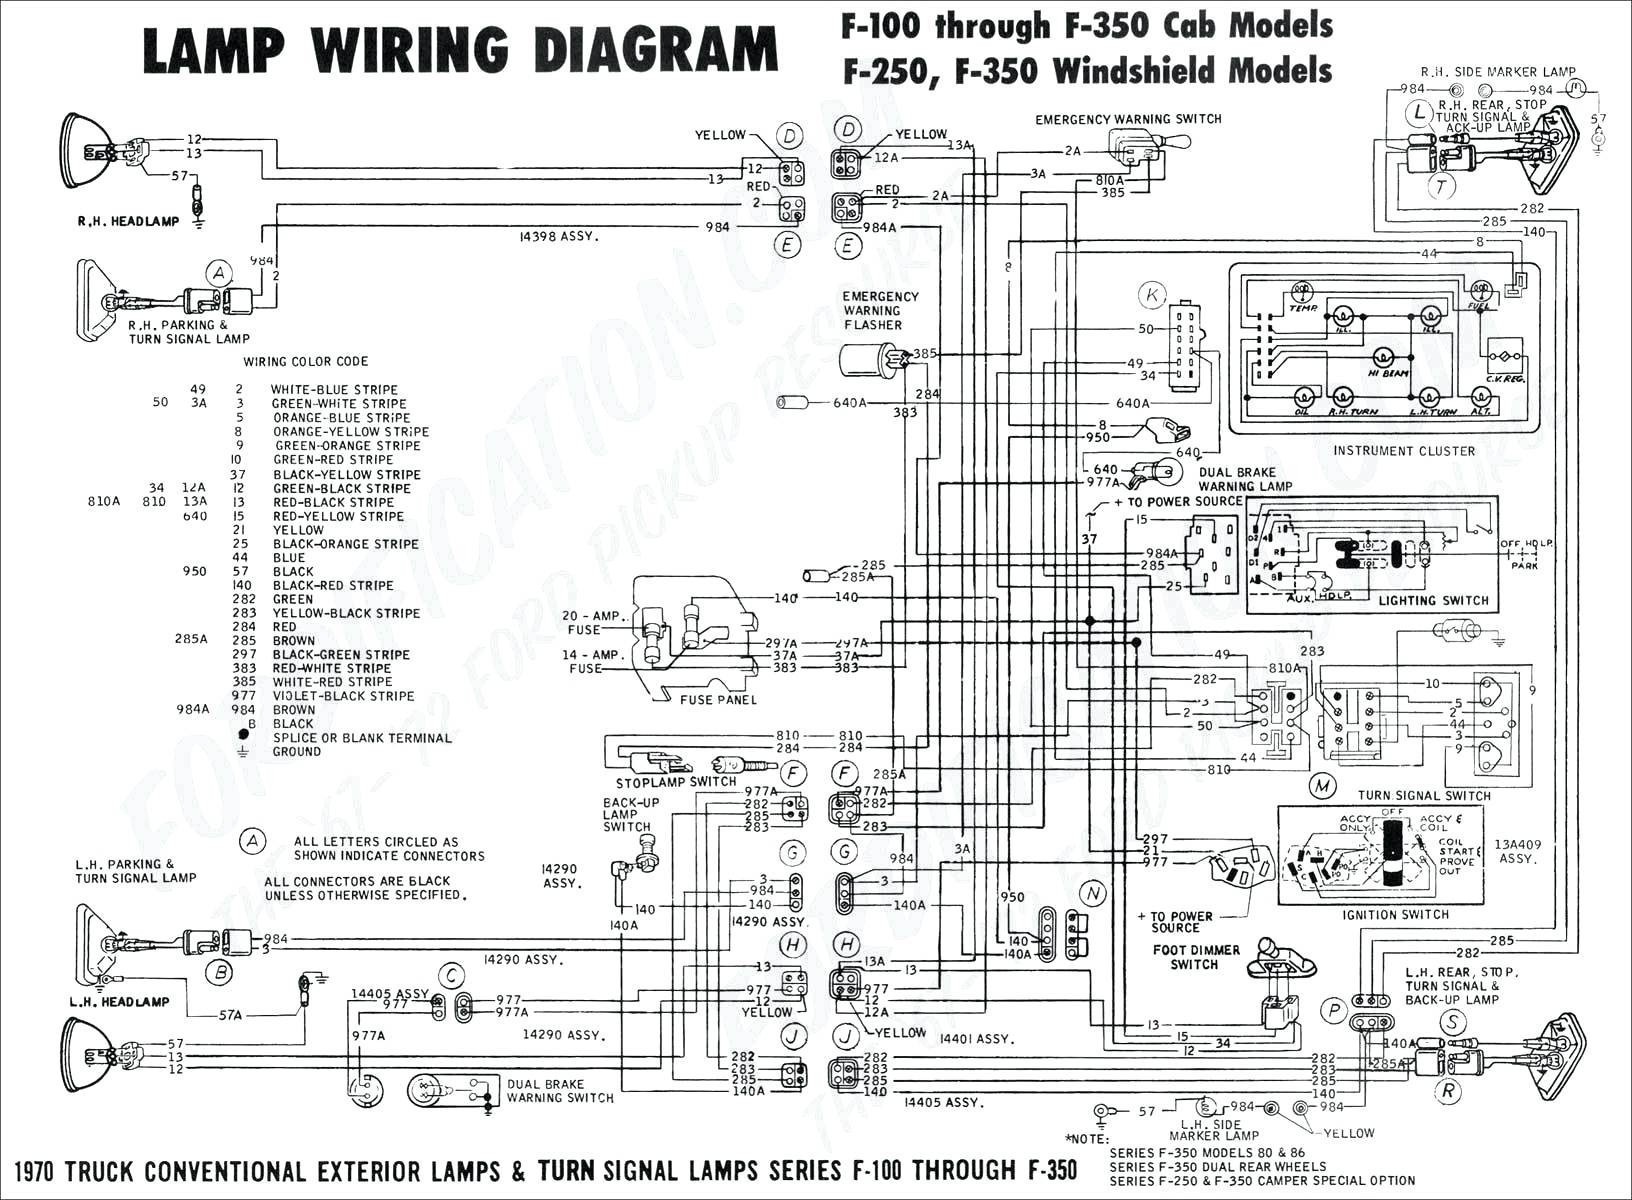 99 ford Escort Engine Diagram Ac Wiring Diagram 2000 E250 Wiring Diagram Datasource Of 99 ford Escort Engine Diagram